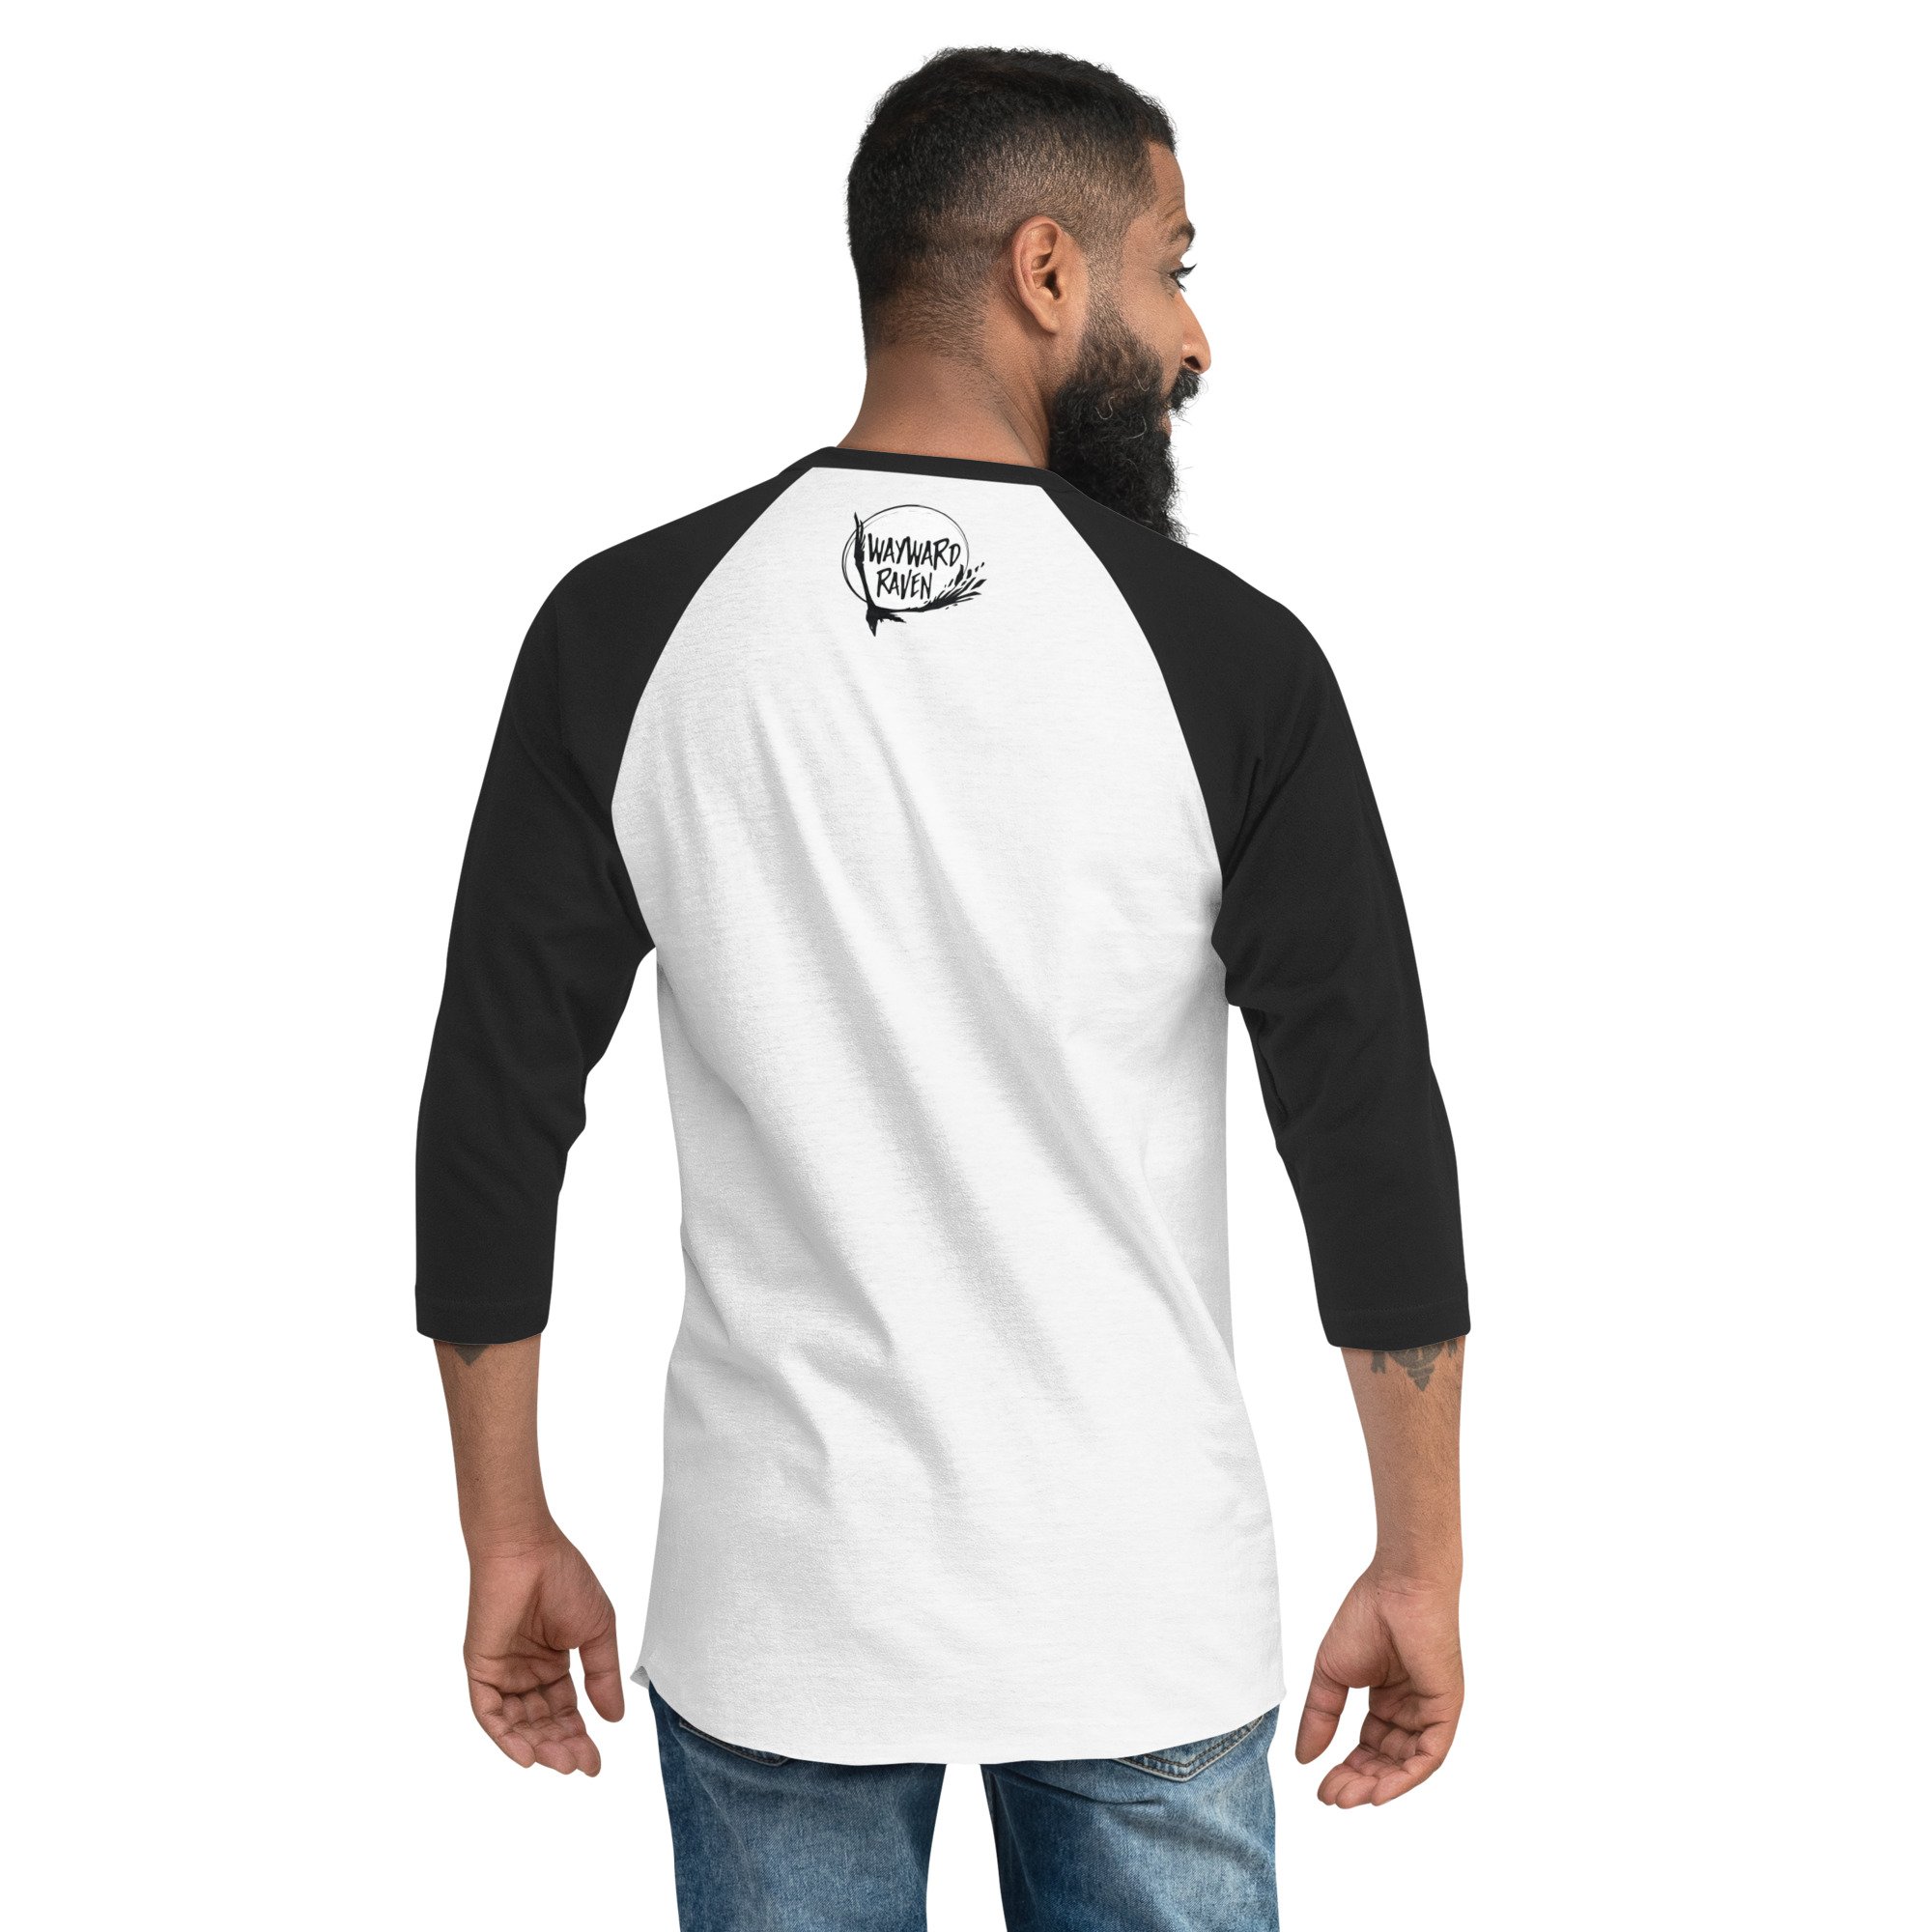 unisex-34-sleeve-raglan-shirt-white-black-back-65fdcb001cf38.jpg